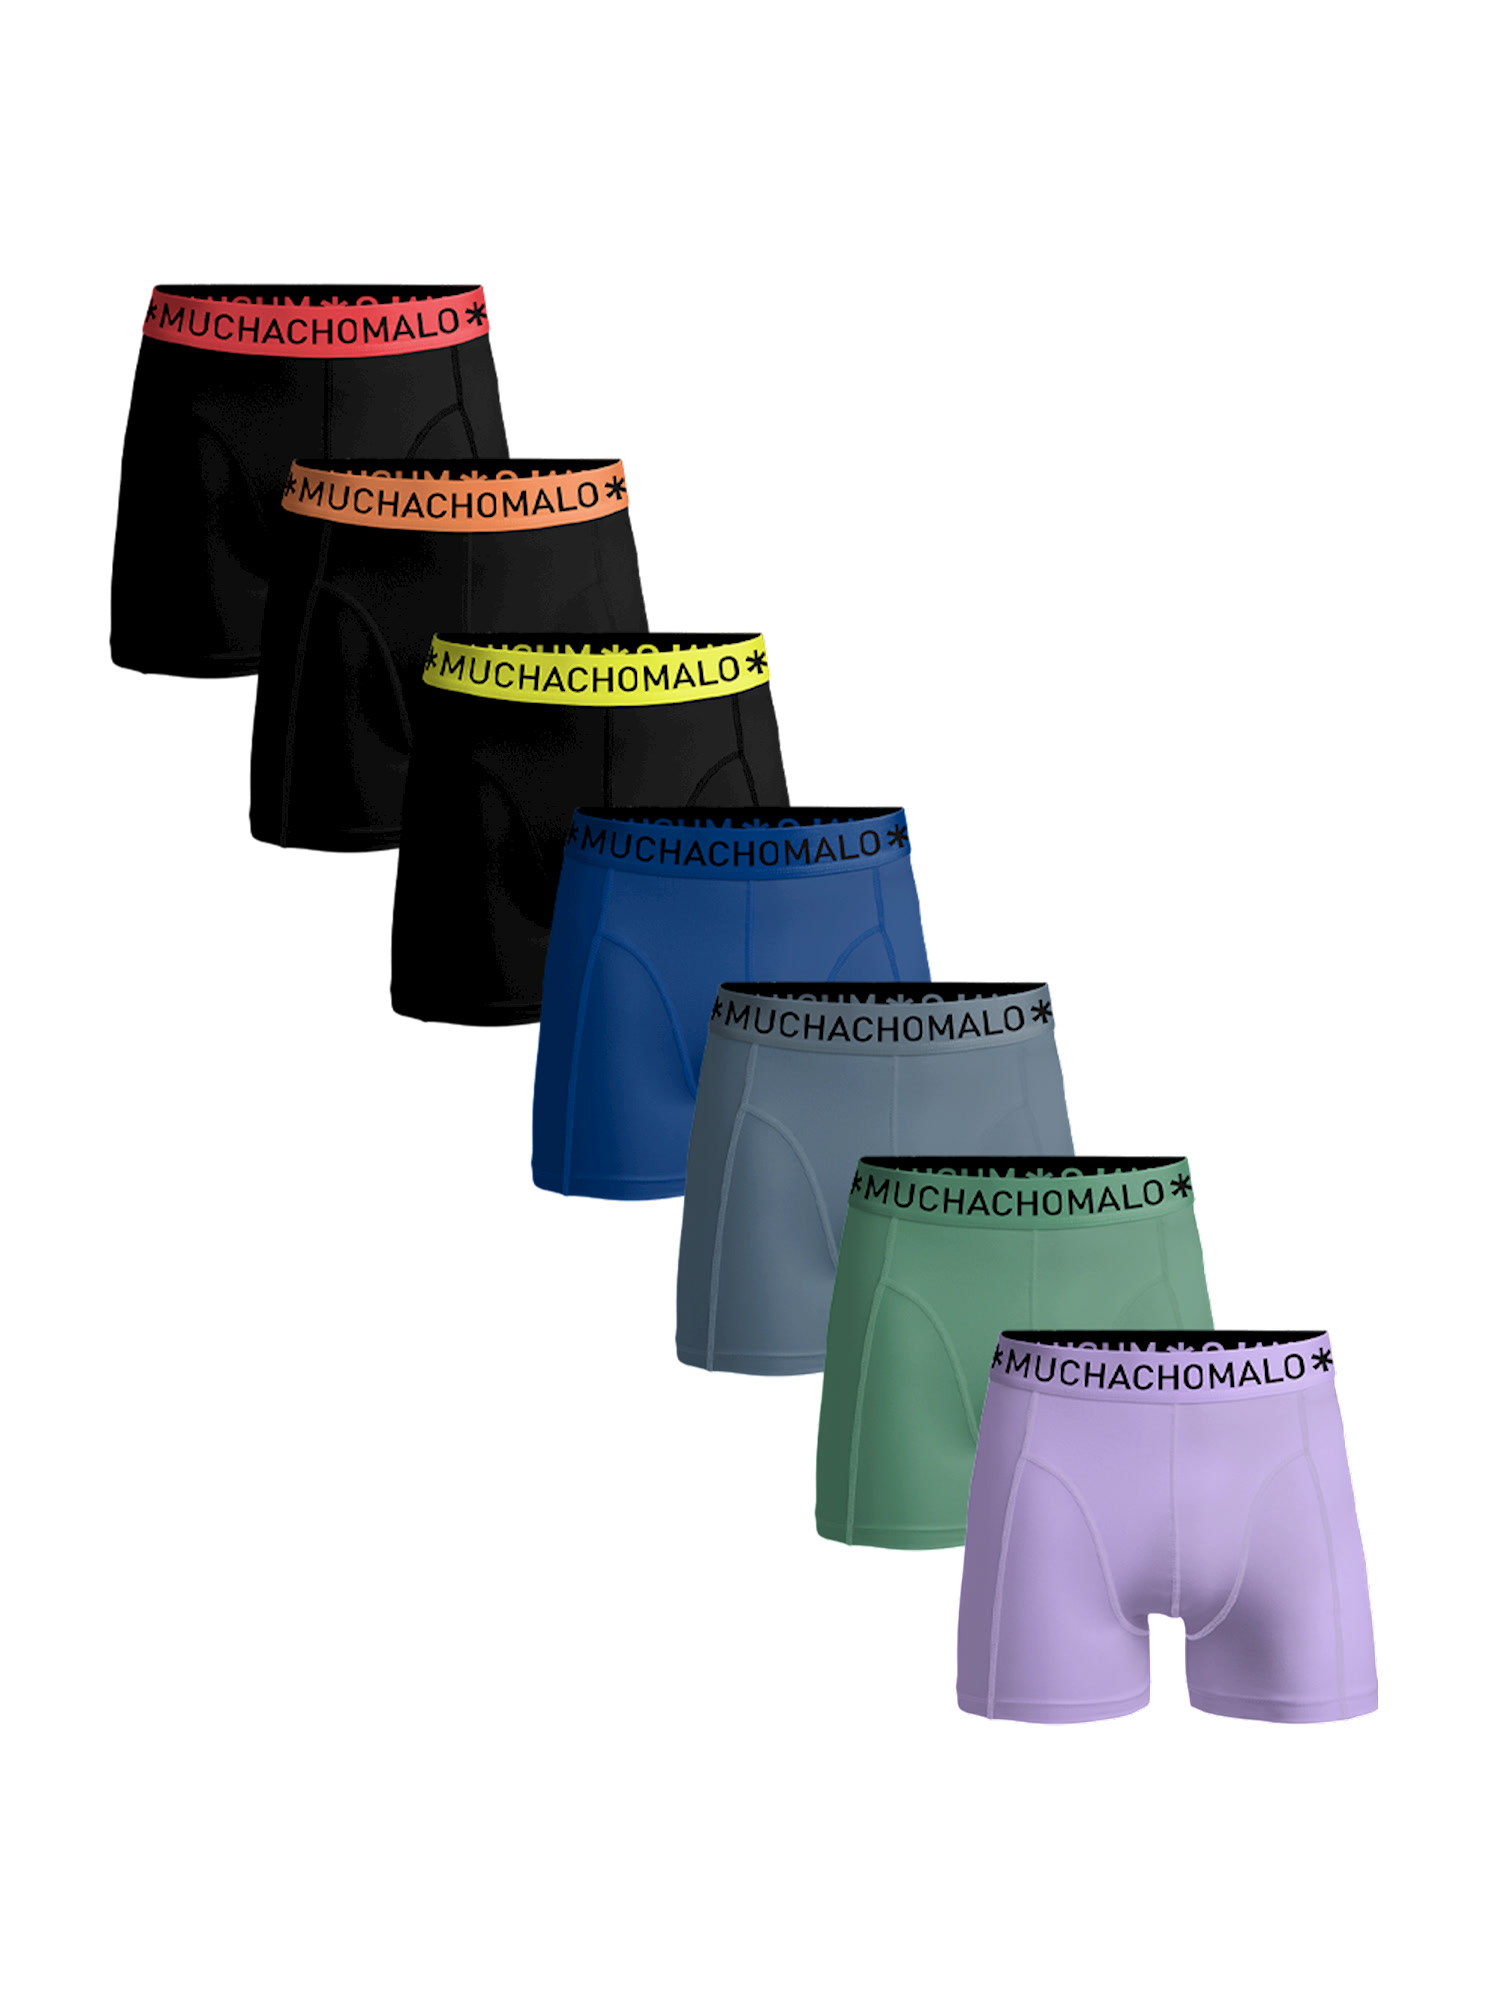 Боксеры Muchachomalo 7er-Set: Boxershorts, цвет Black/Black/Black/Blue/Grey/Green/Purple